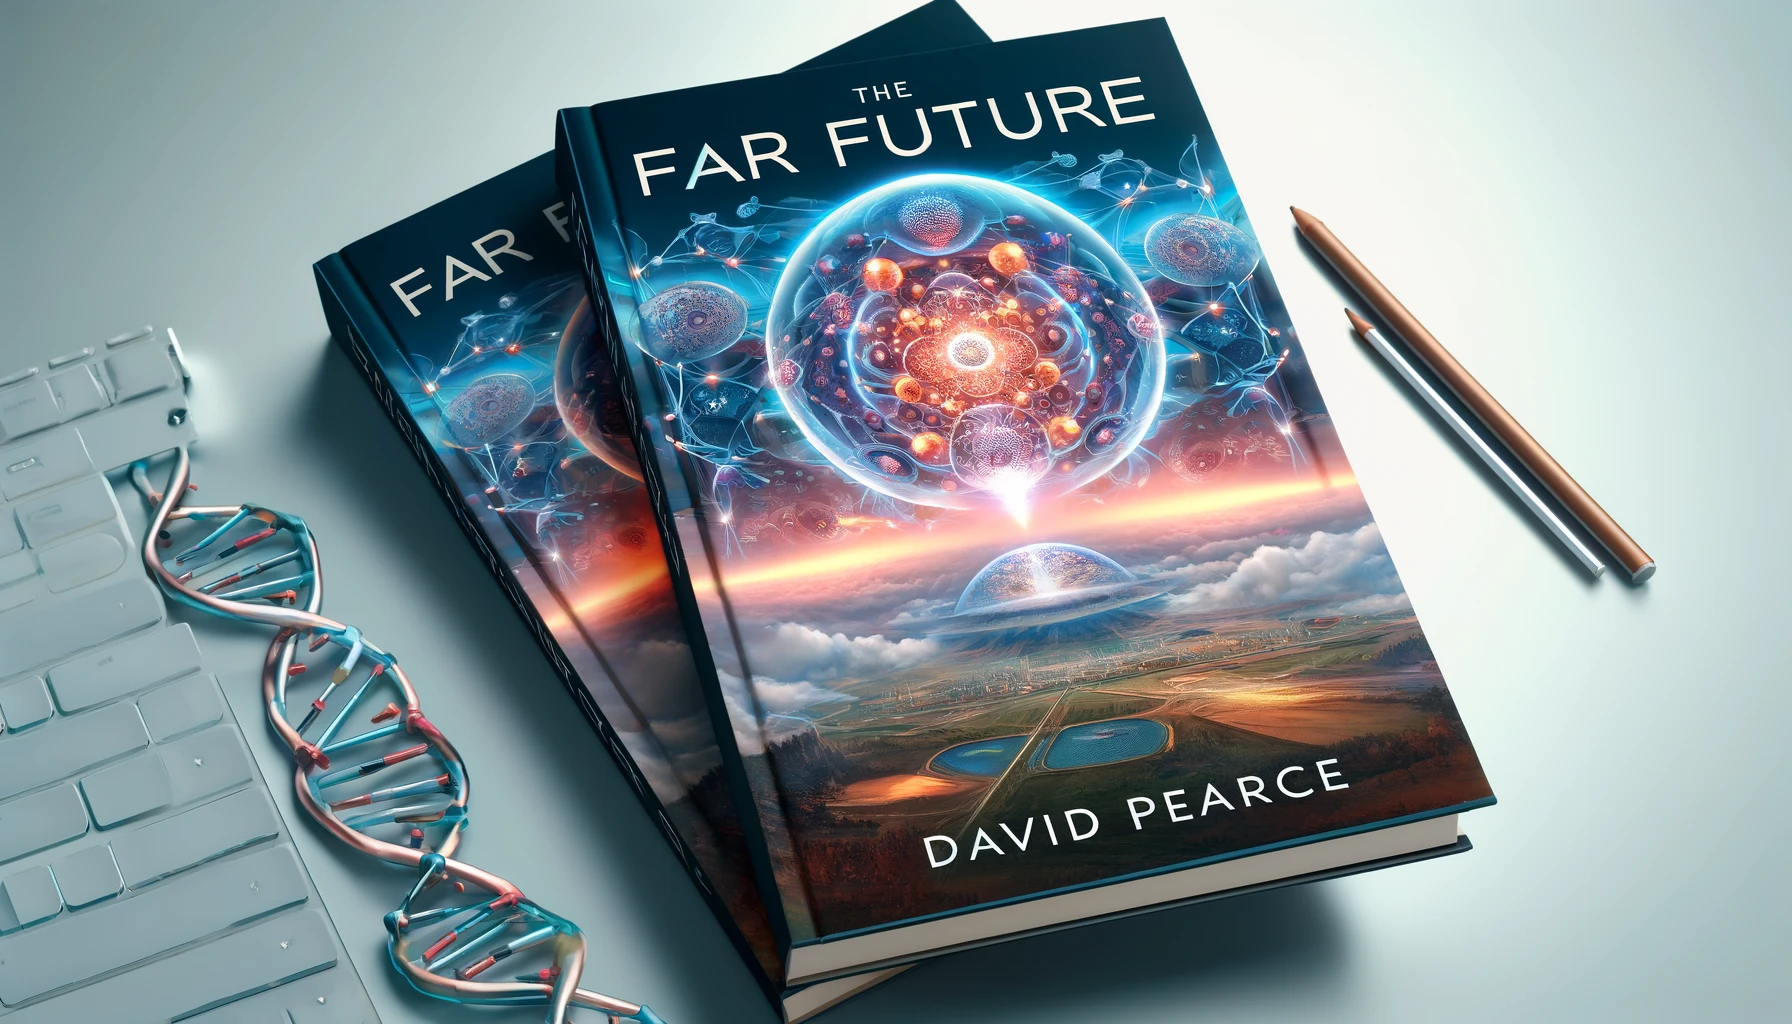 The Far Future by David Pearce